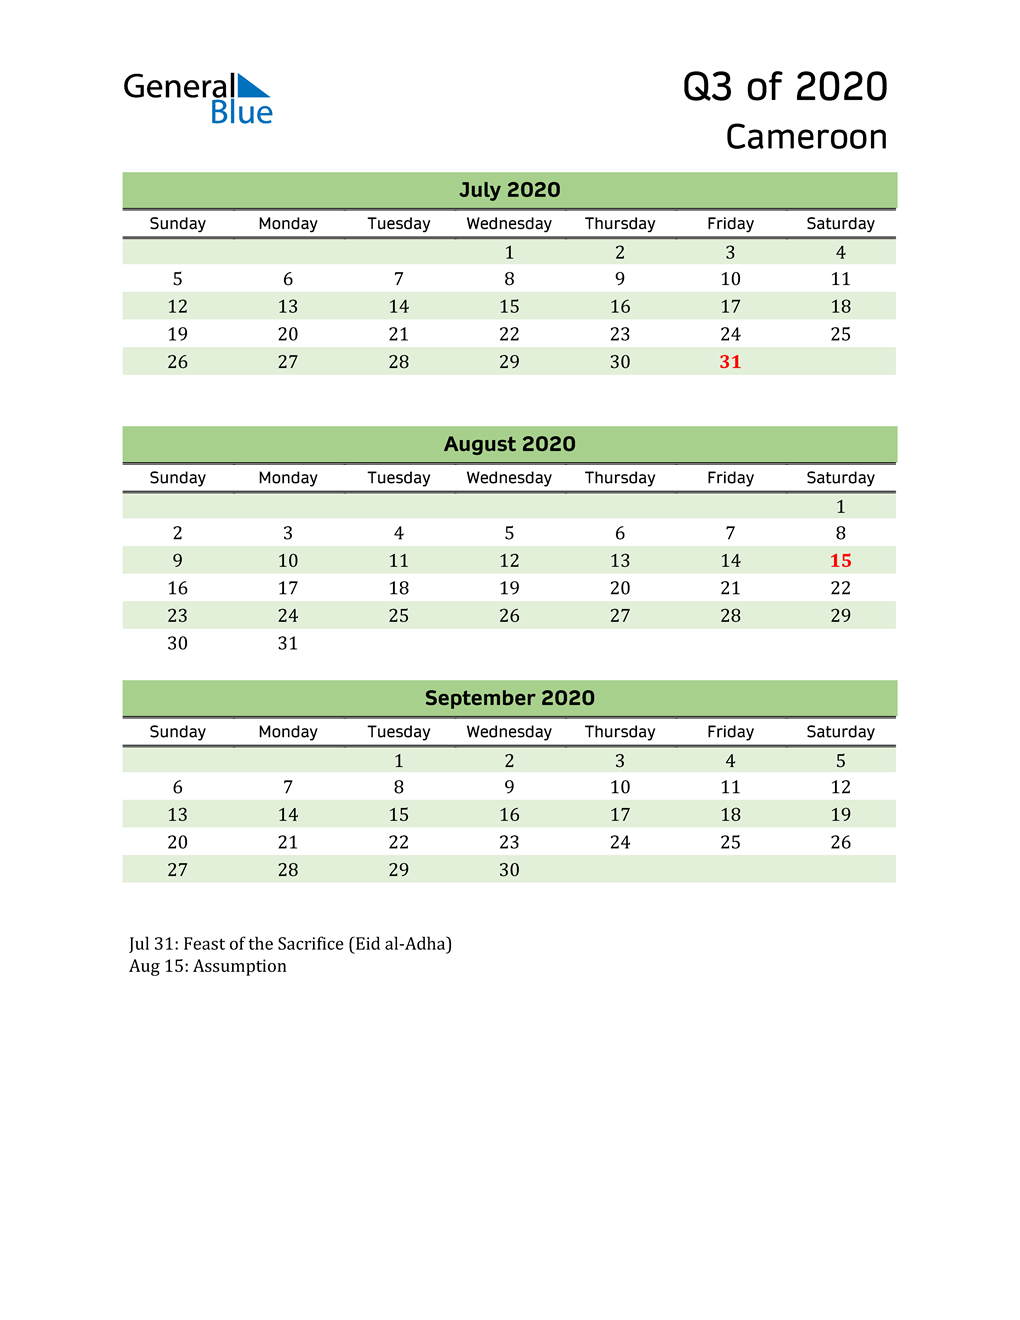  Quarterly Calendar 2020 with Cameroon Holidays 